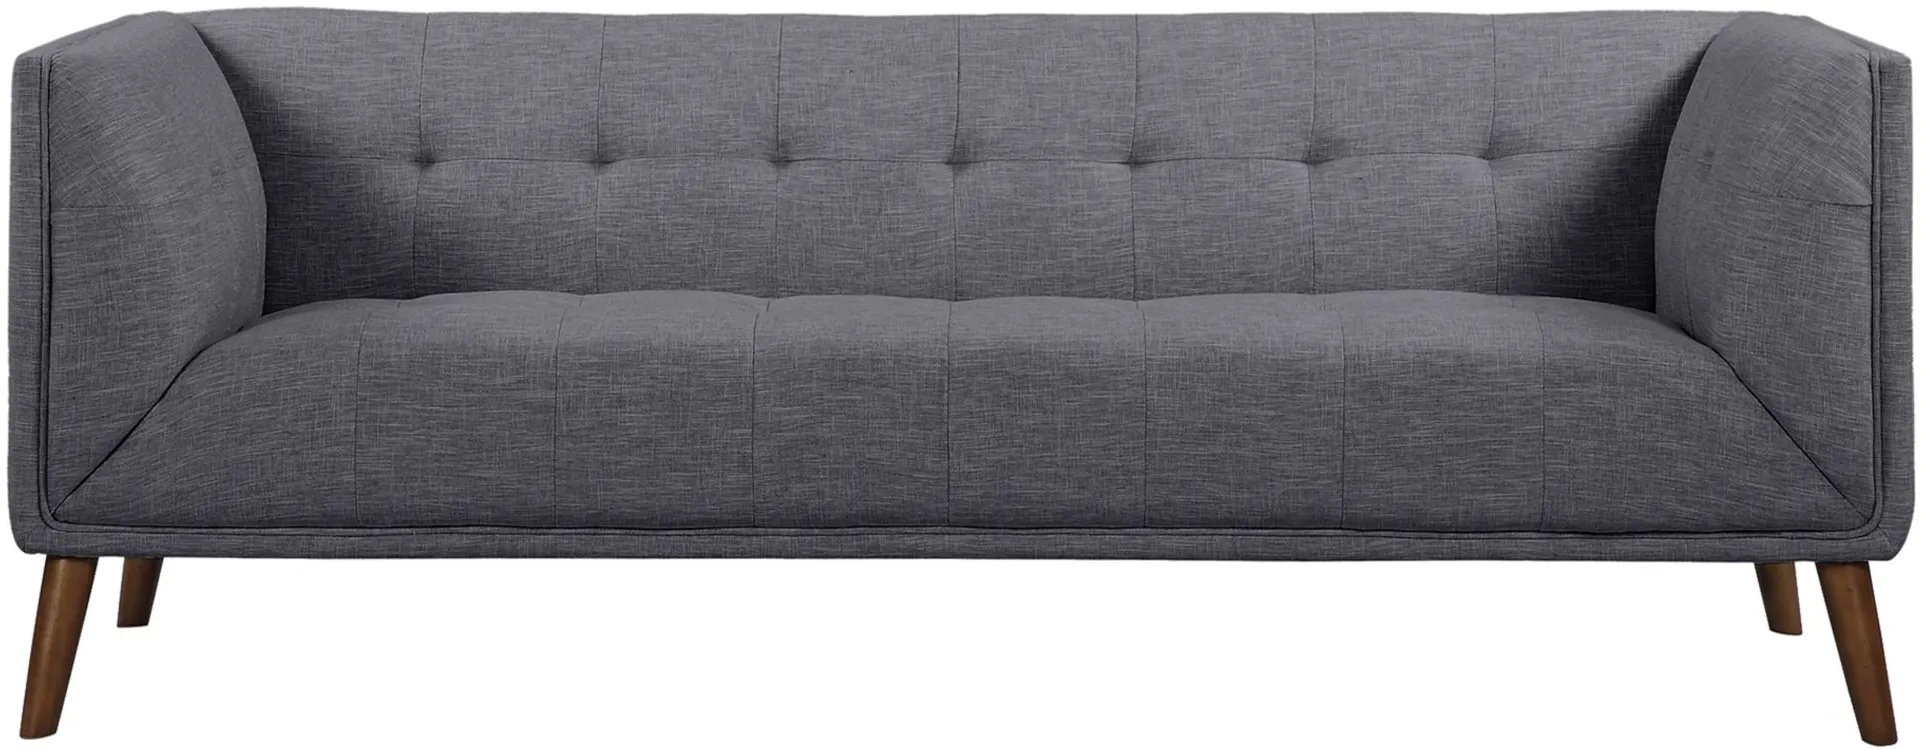 Hudson Sofa in Dark Gray by Armen Living